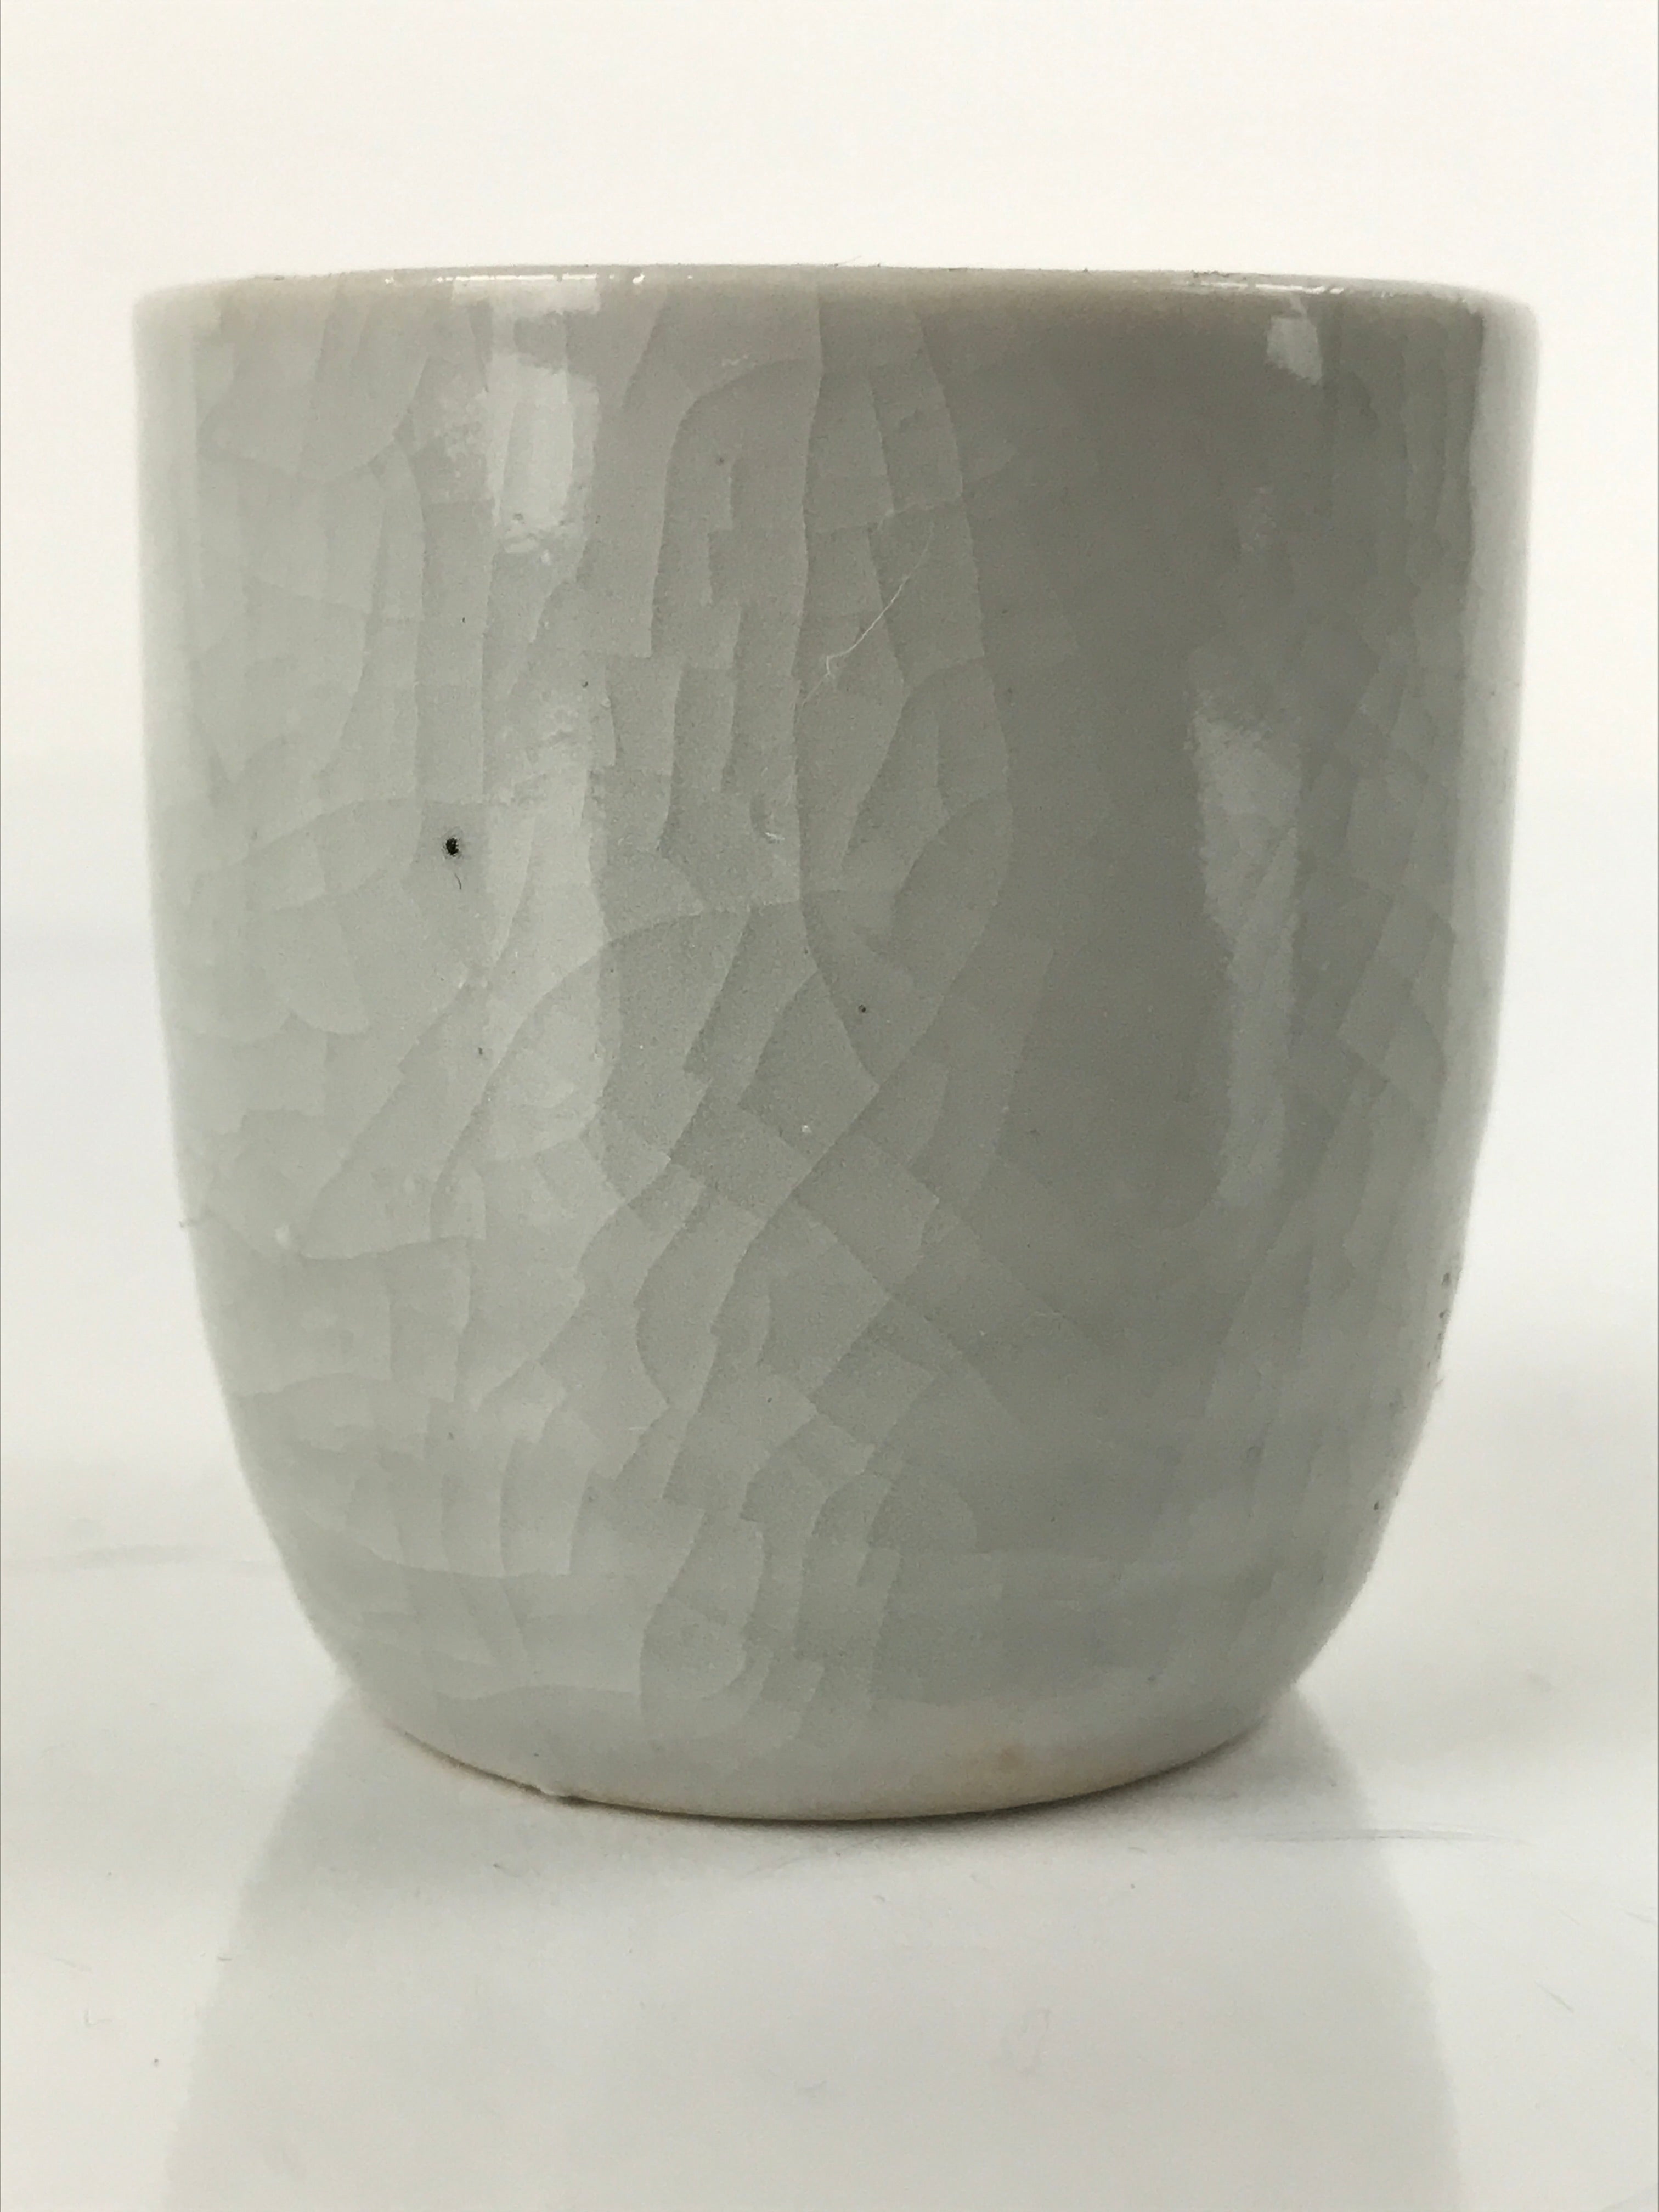 Japanese Ceramic Sake Cup Vtg Tsubomi Ochoko Guinomi Simple Plain Gray G175